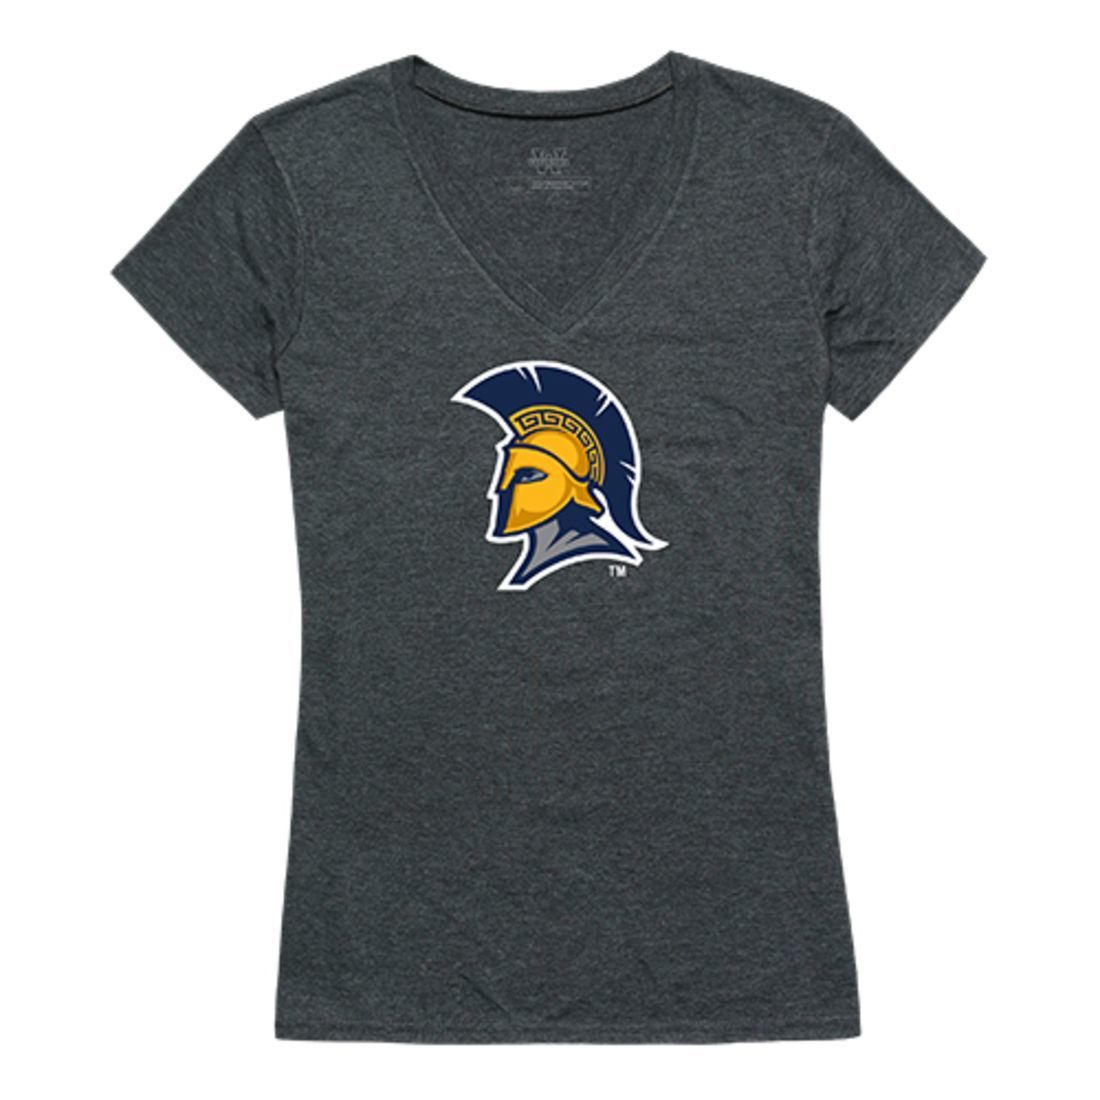 UNCG University of North Carolina at Greensboro Spartans Womens Cinder Tee T-Shirt Heather Charcoal-Campus-Wardrobe